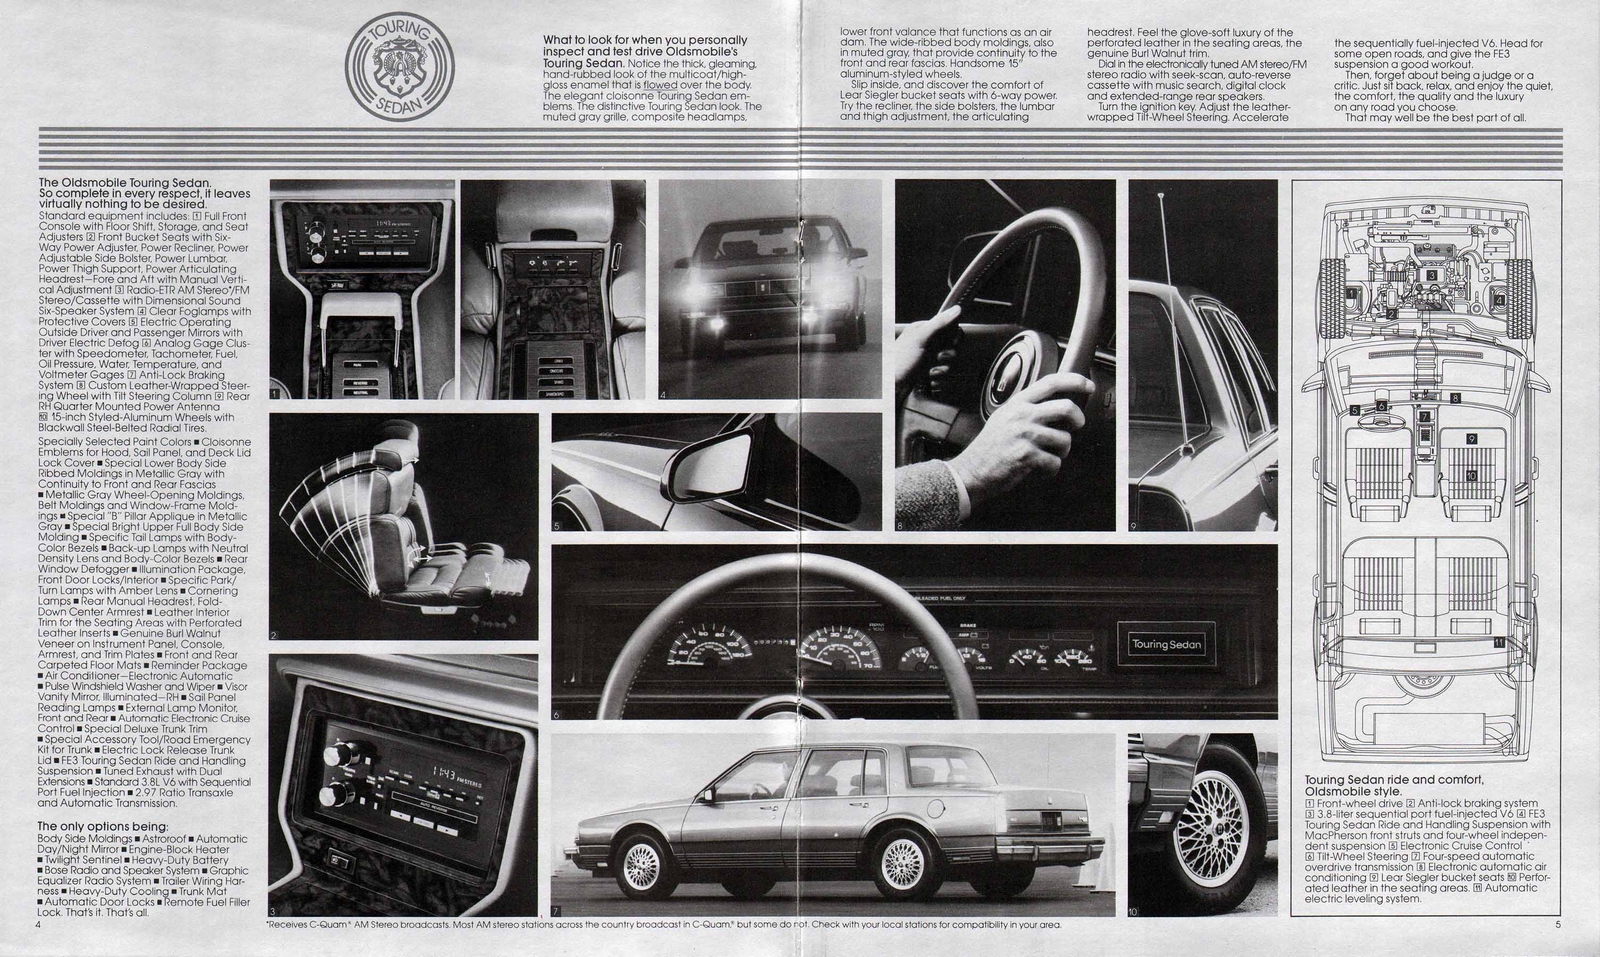 n_1987 Oldsmobile Touring Sedan Foldout-04-05.jpg